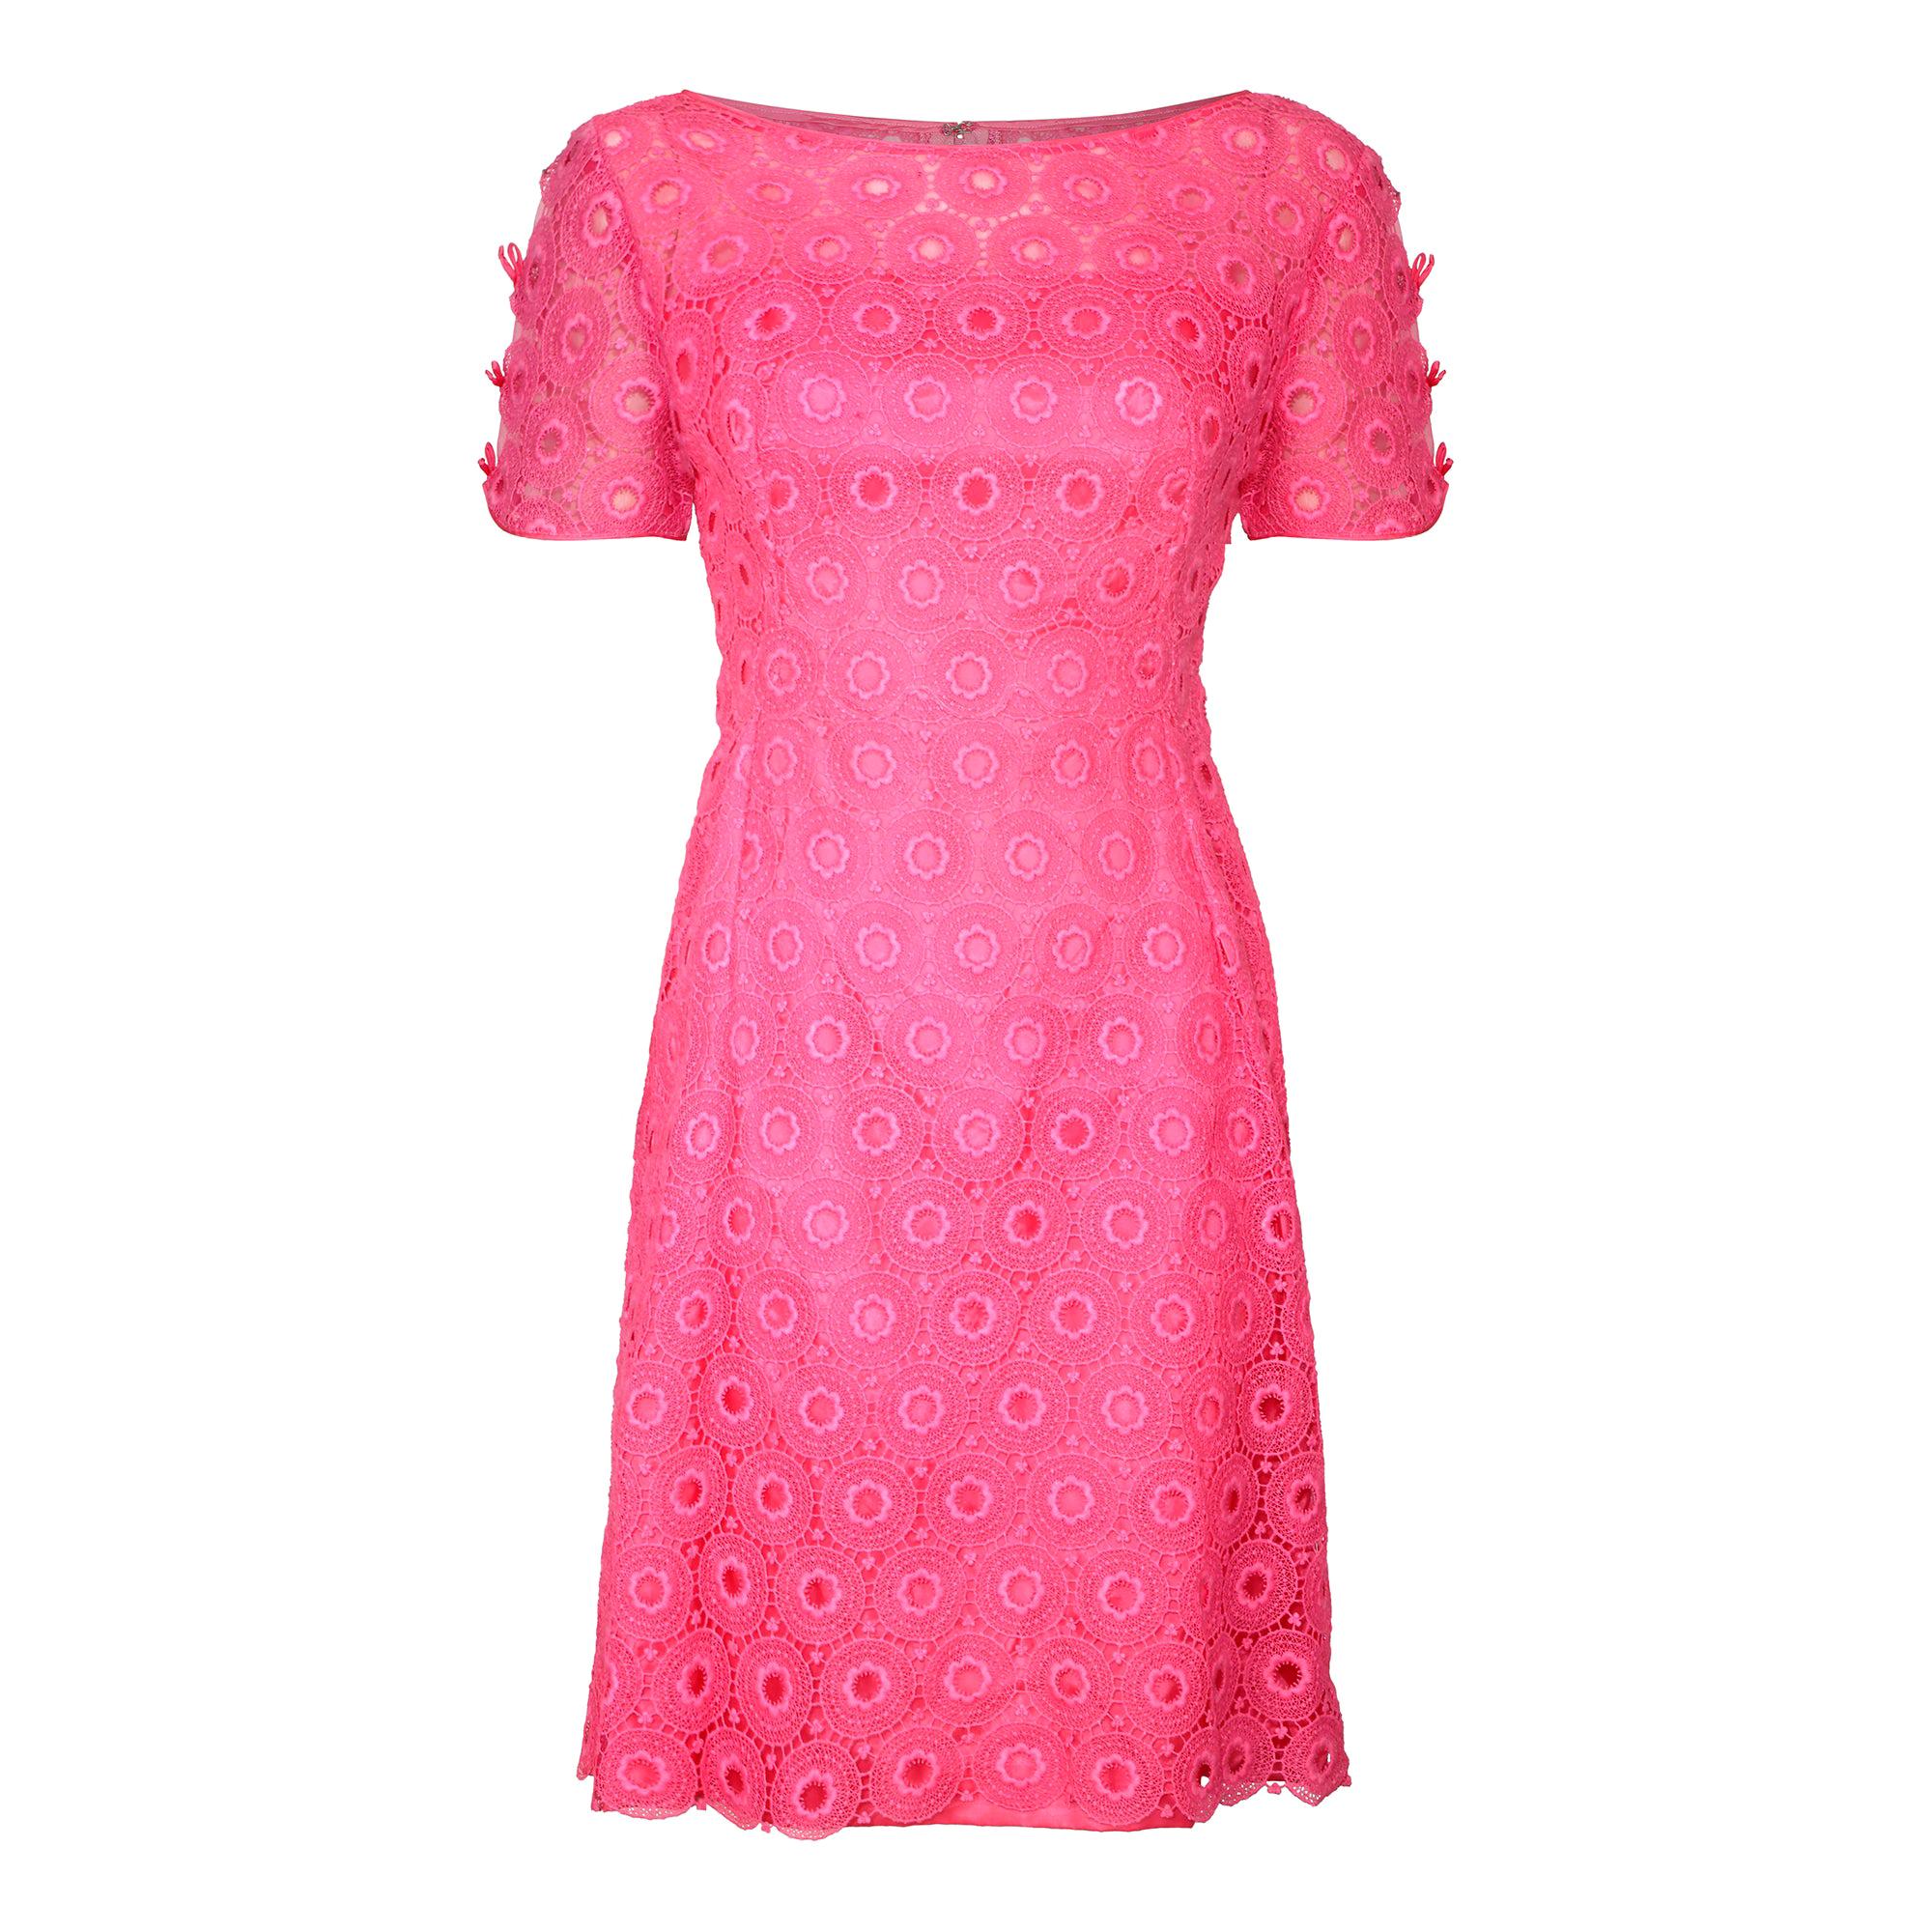 1960s Cerise Pink Crochet Dress by Janet Cotton For Sale